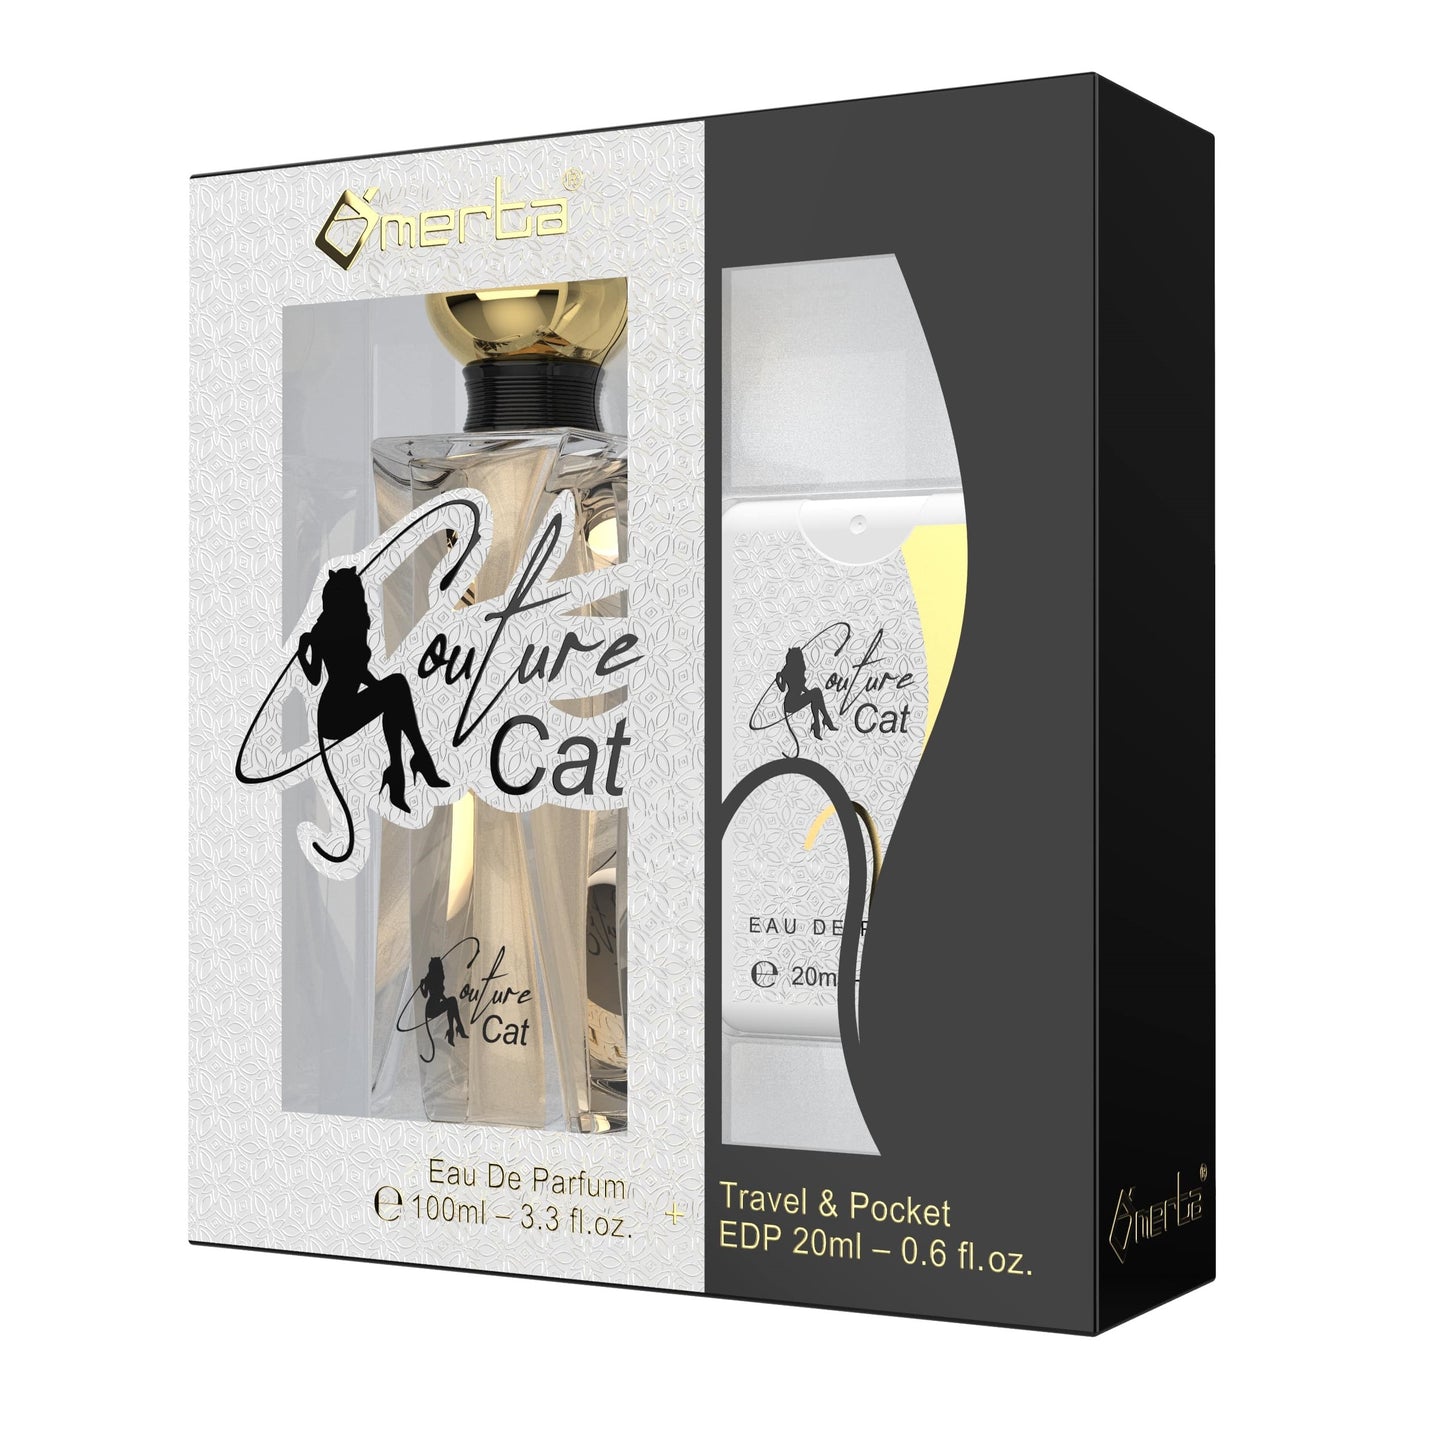 100 ml + 20 ml Eau de Perfume "COUTURE CAT" Fragancia Floral – Afrutada para Mujer